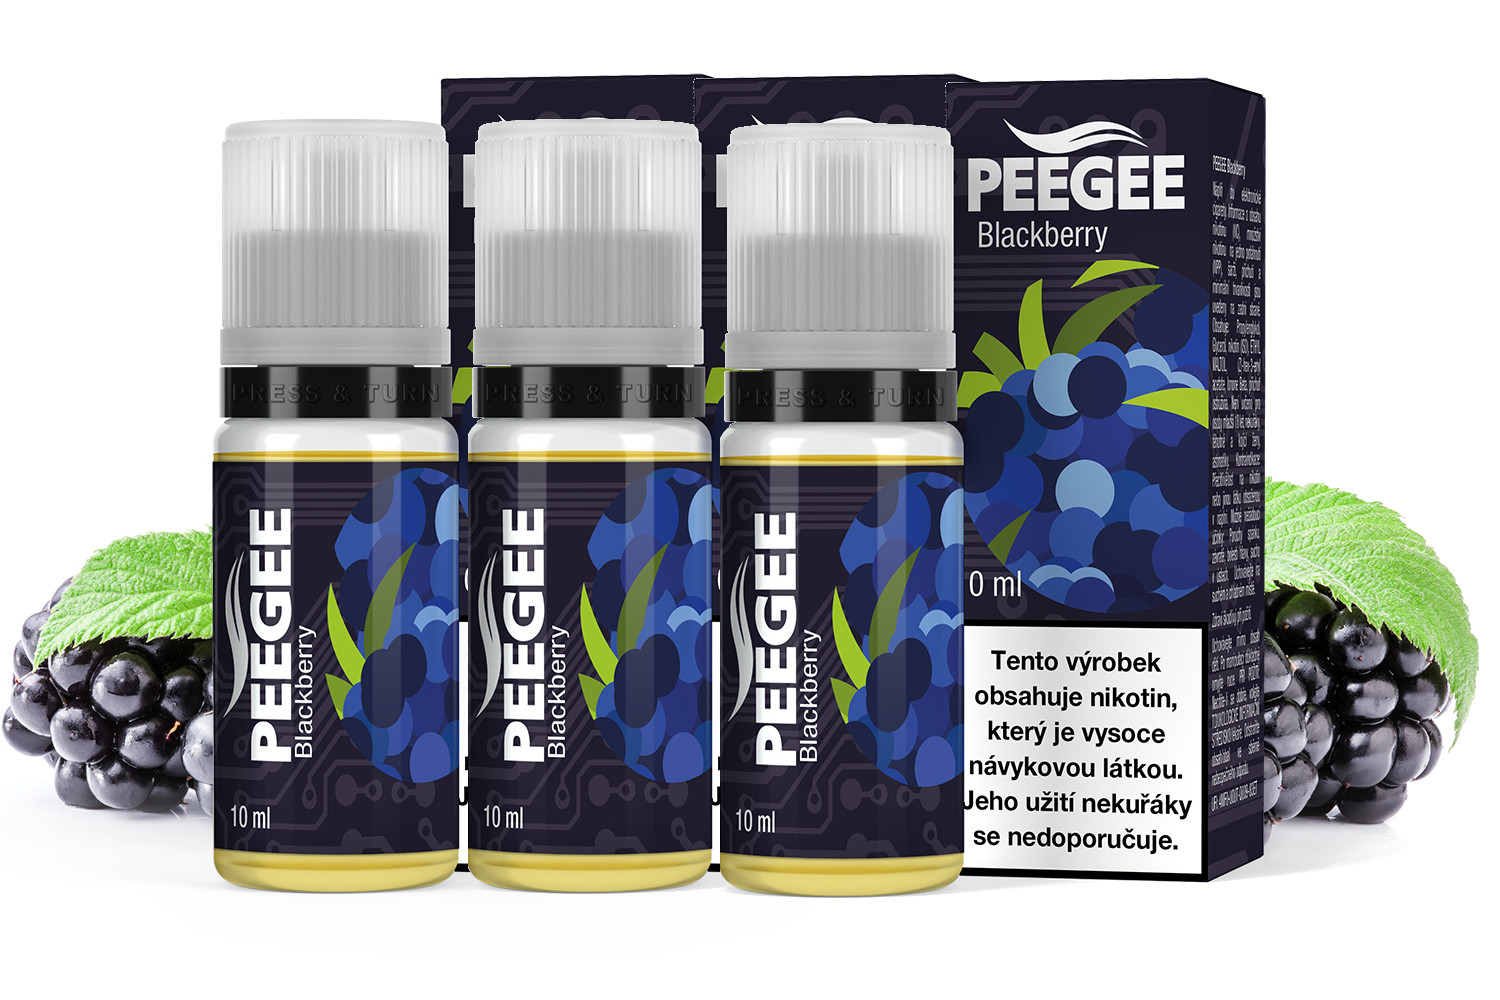 PEEGEE - Ostružina (Blackberry) 3x10ml Obsah nikotinu: 6mg